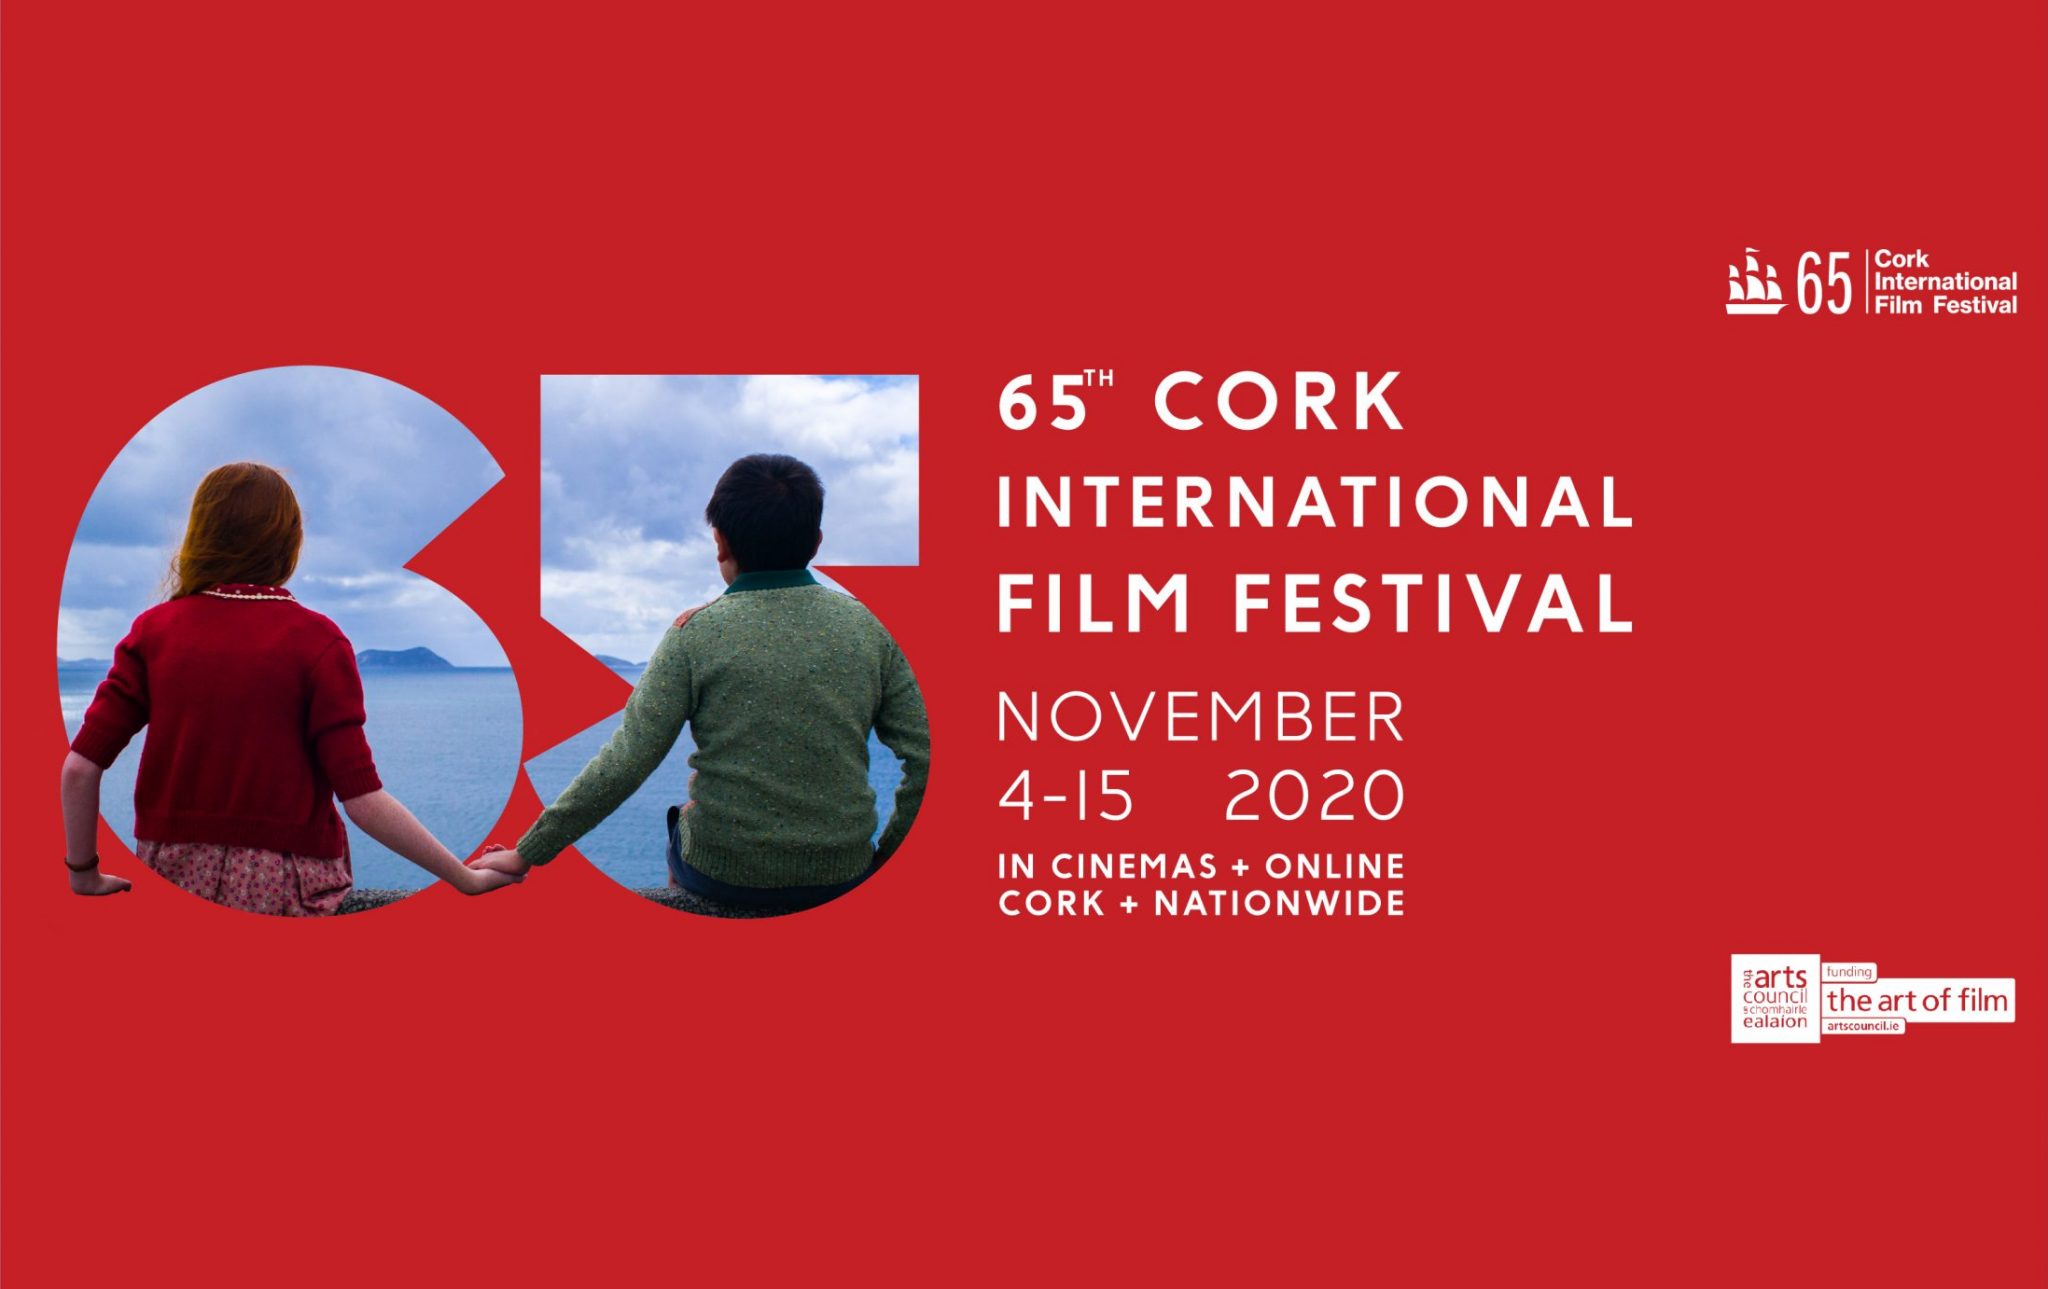 Cork International Film Festival kicks off on 4th November